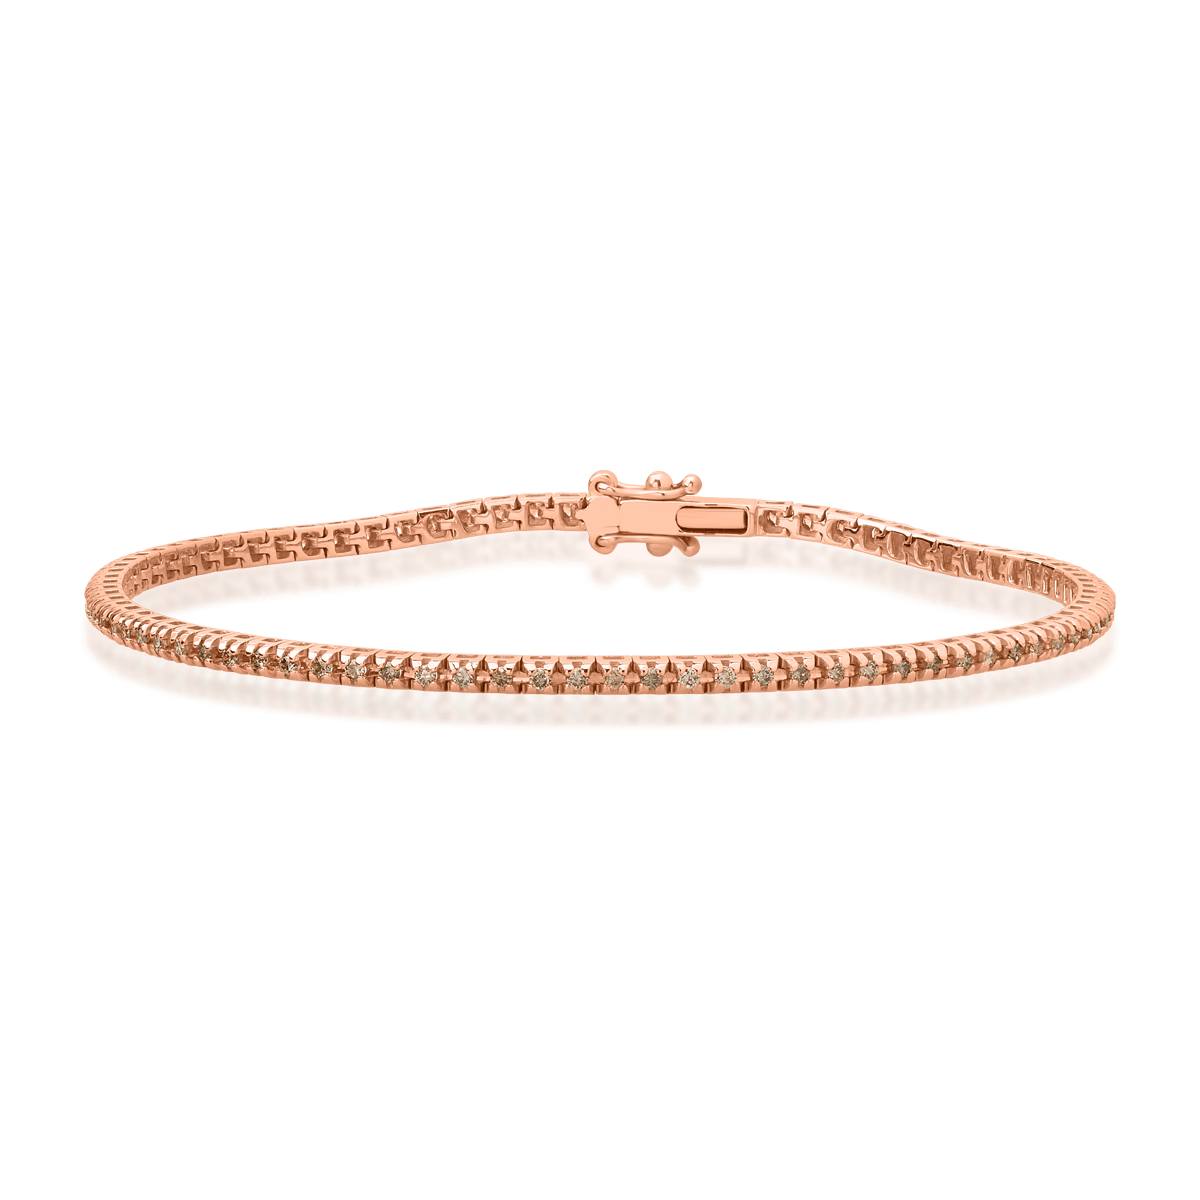 18K rose gold bracelet with 0.7ct brown diamonds